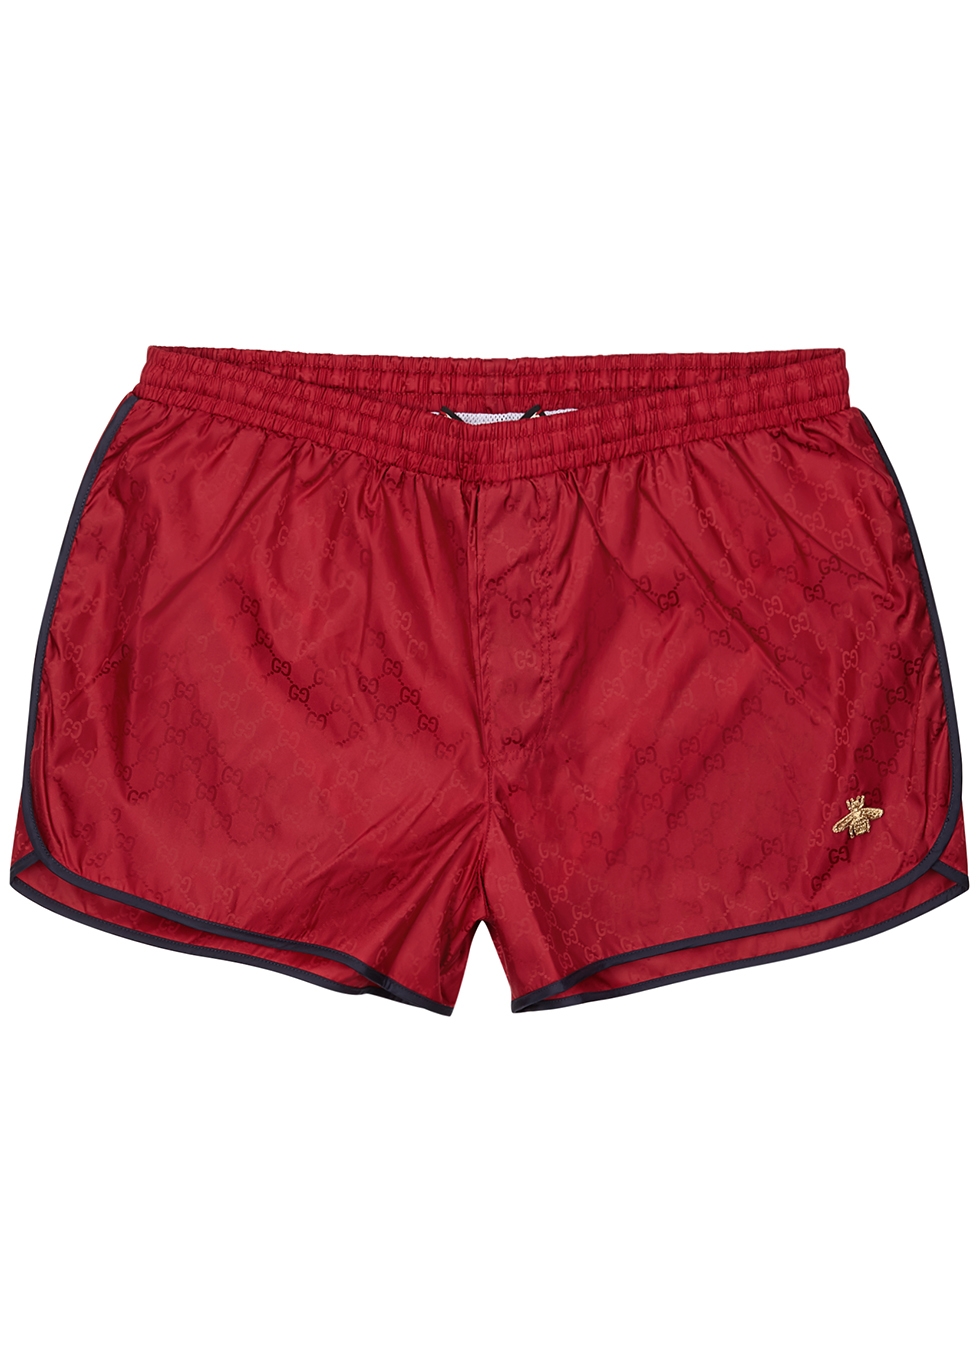 gucci swim shorts red